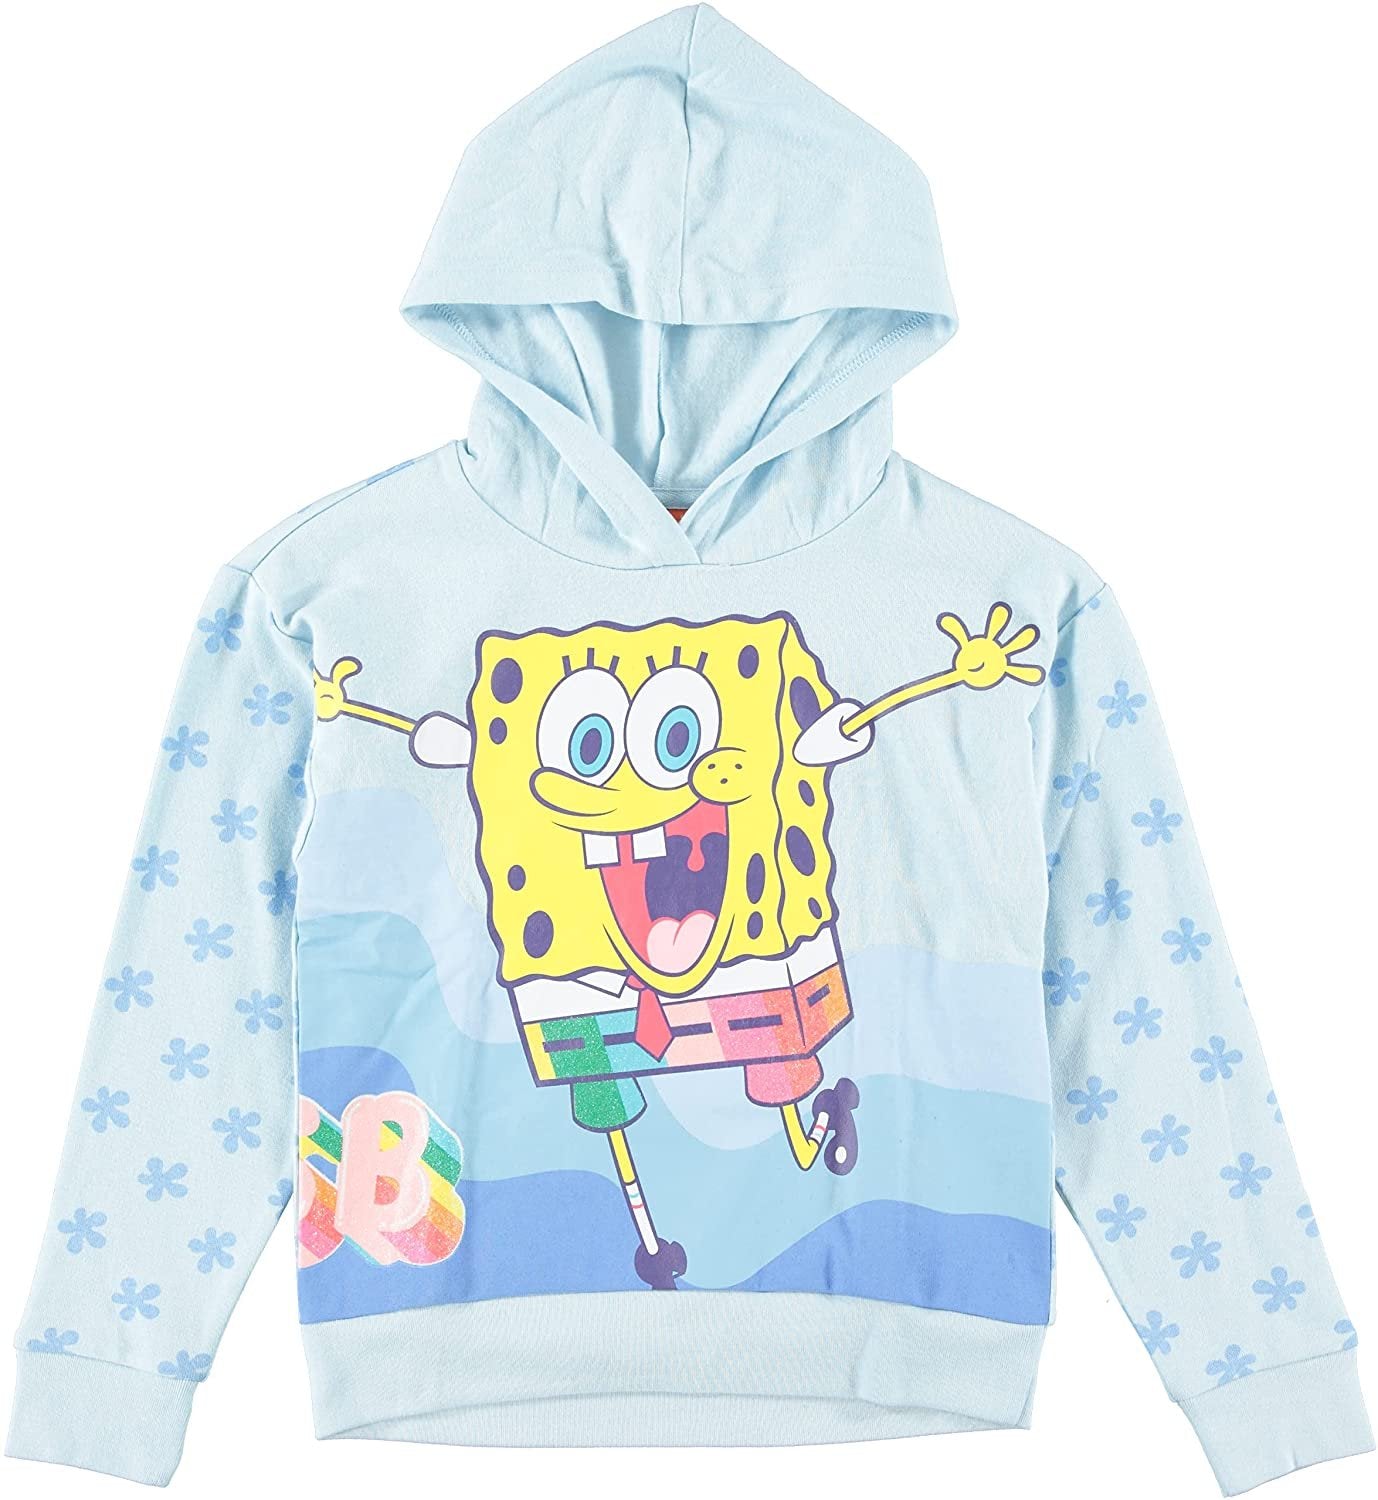 SpongeBob SquarePants Girls Pullover Hoodie and Jogger Clothing Set - Sizes 4-16